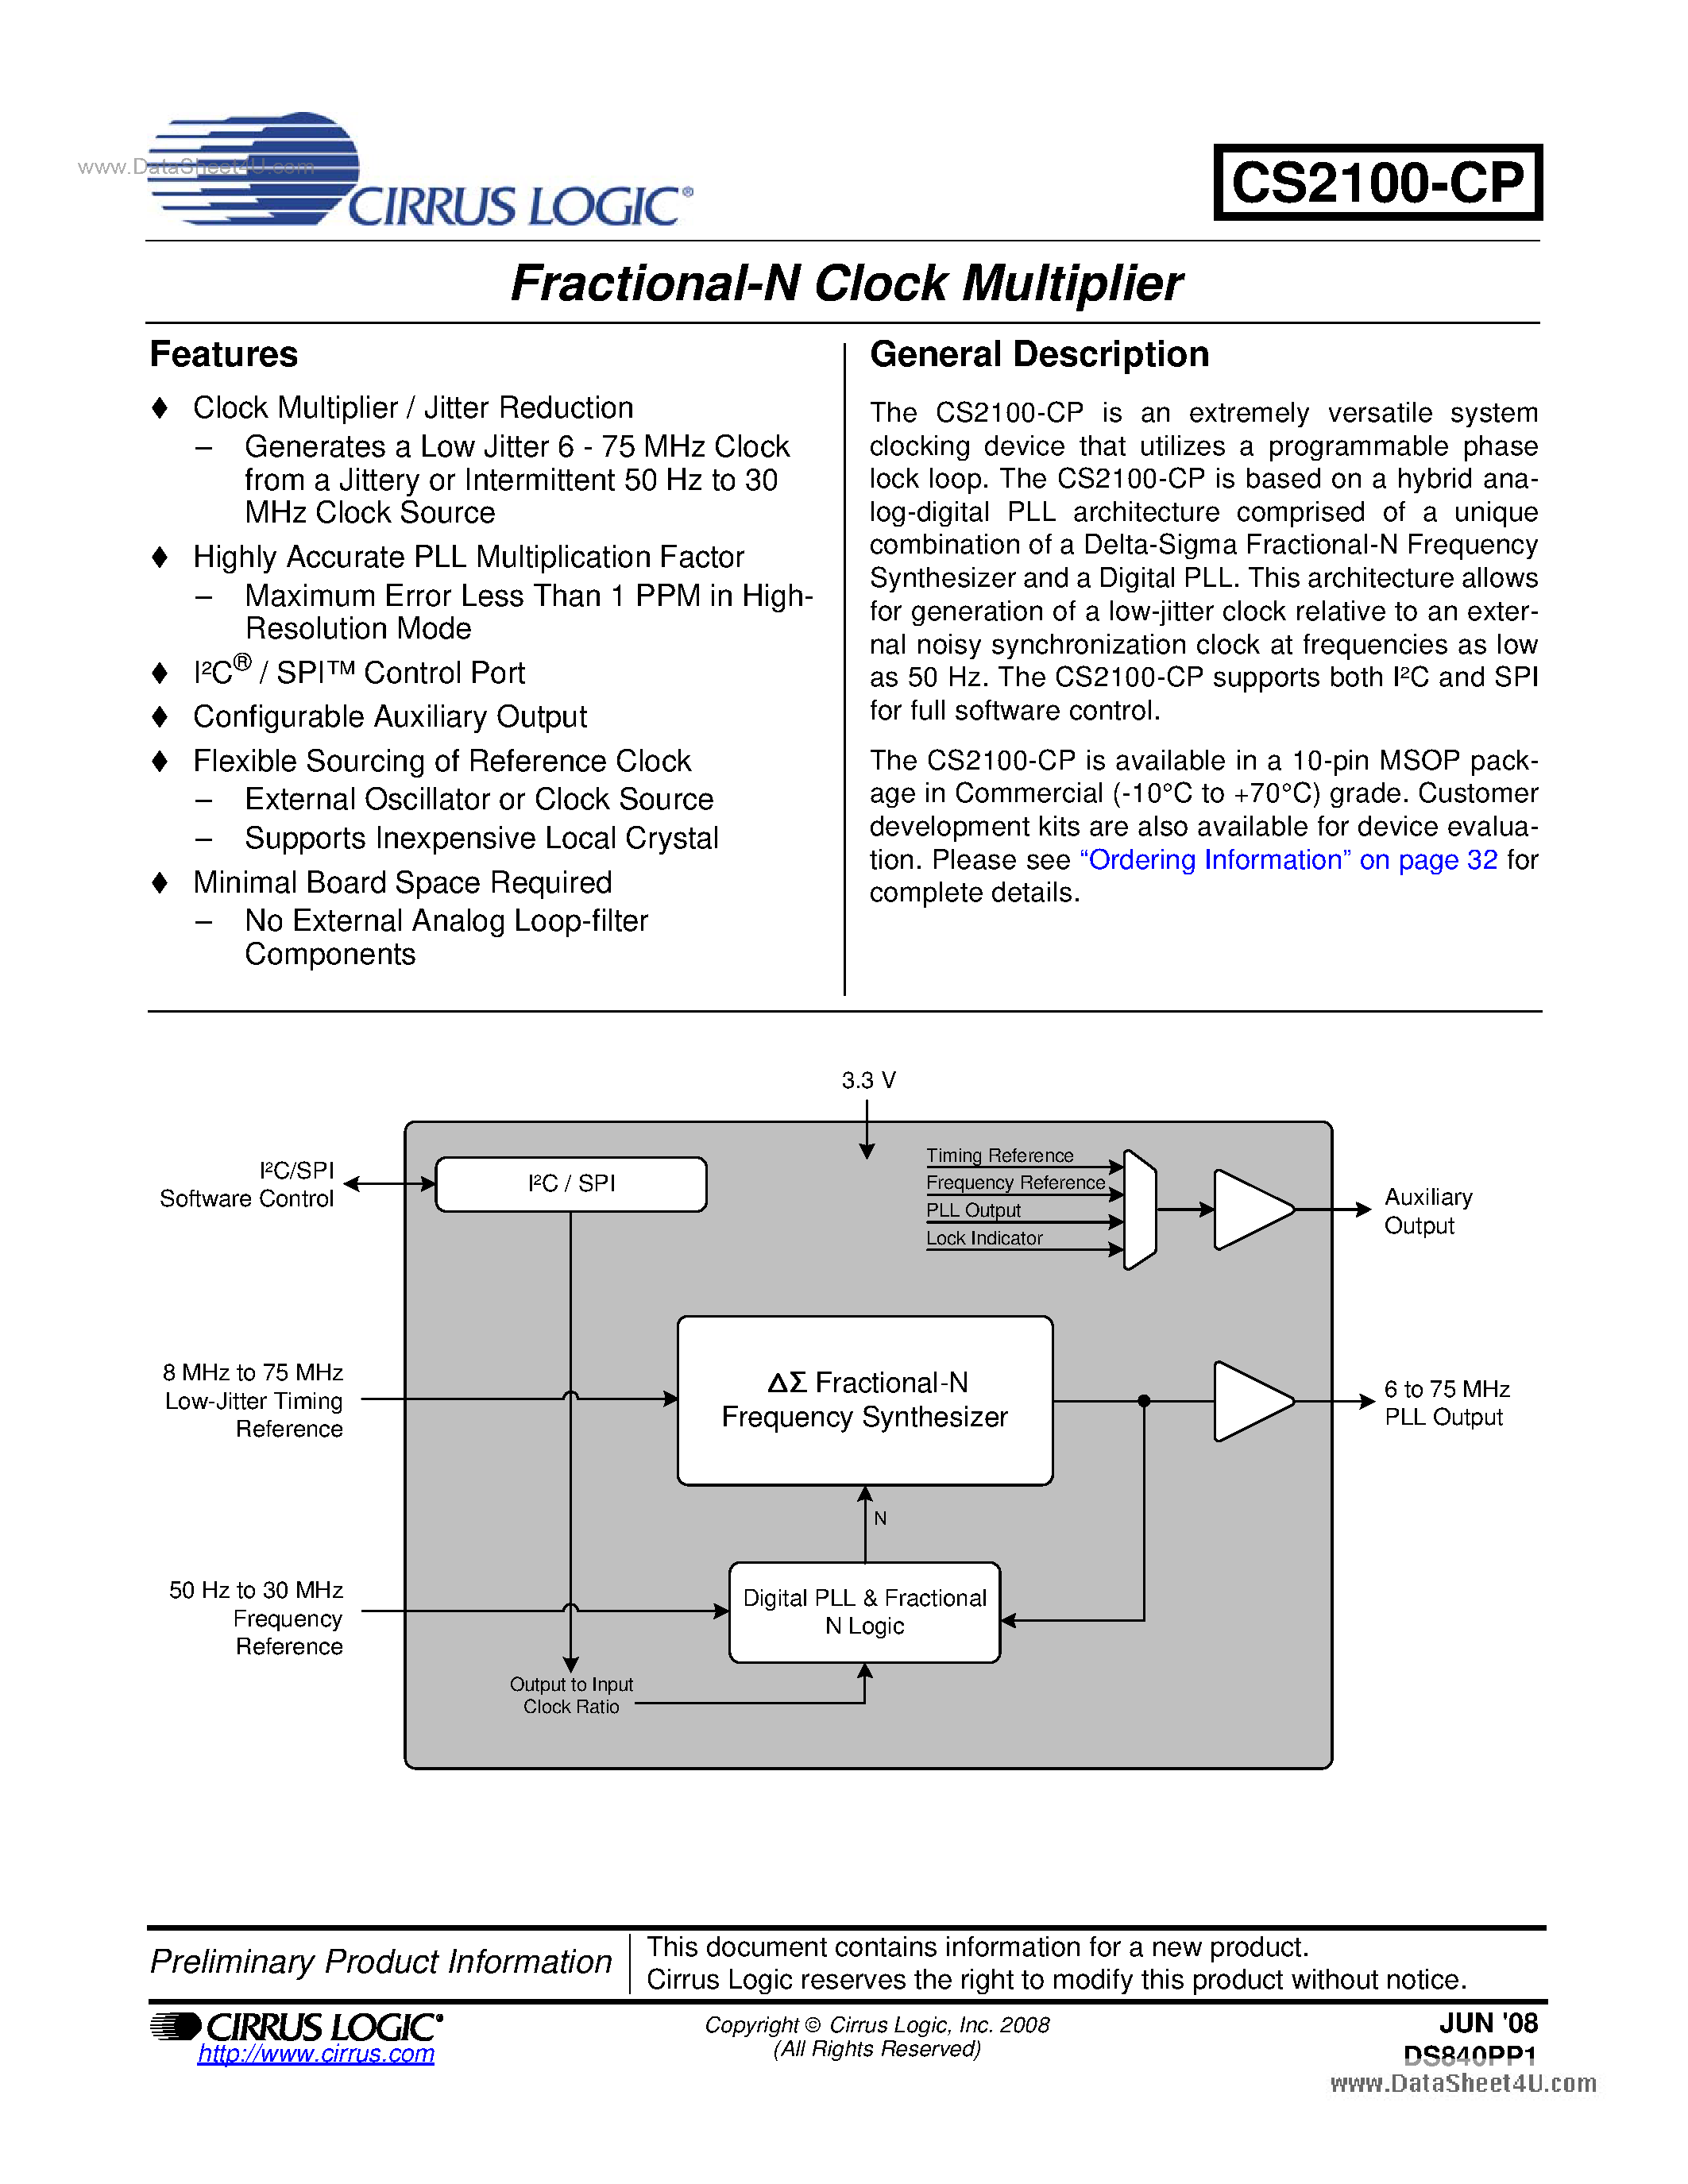 Даташит CS2100-CP - Fractional-N Clock Multiplier страница 1